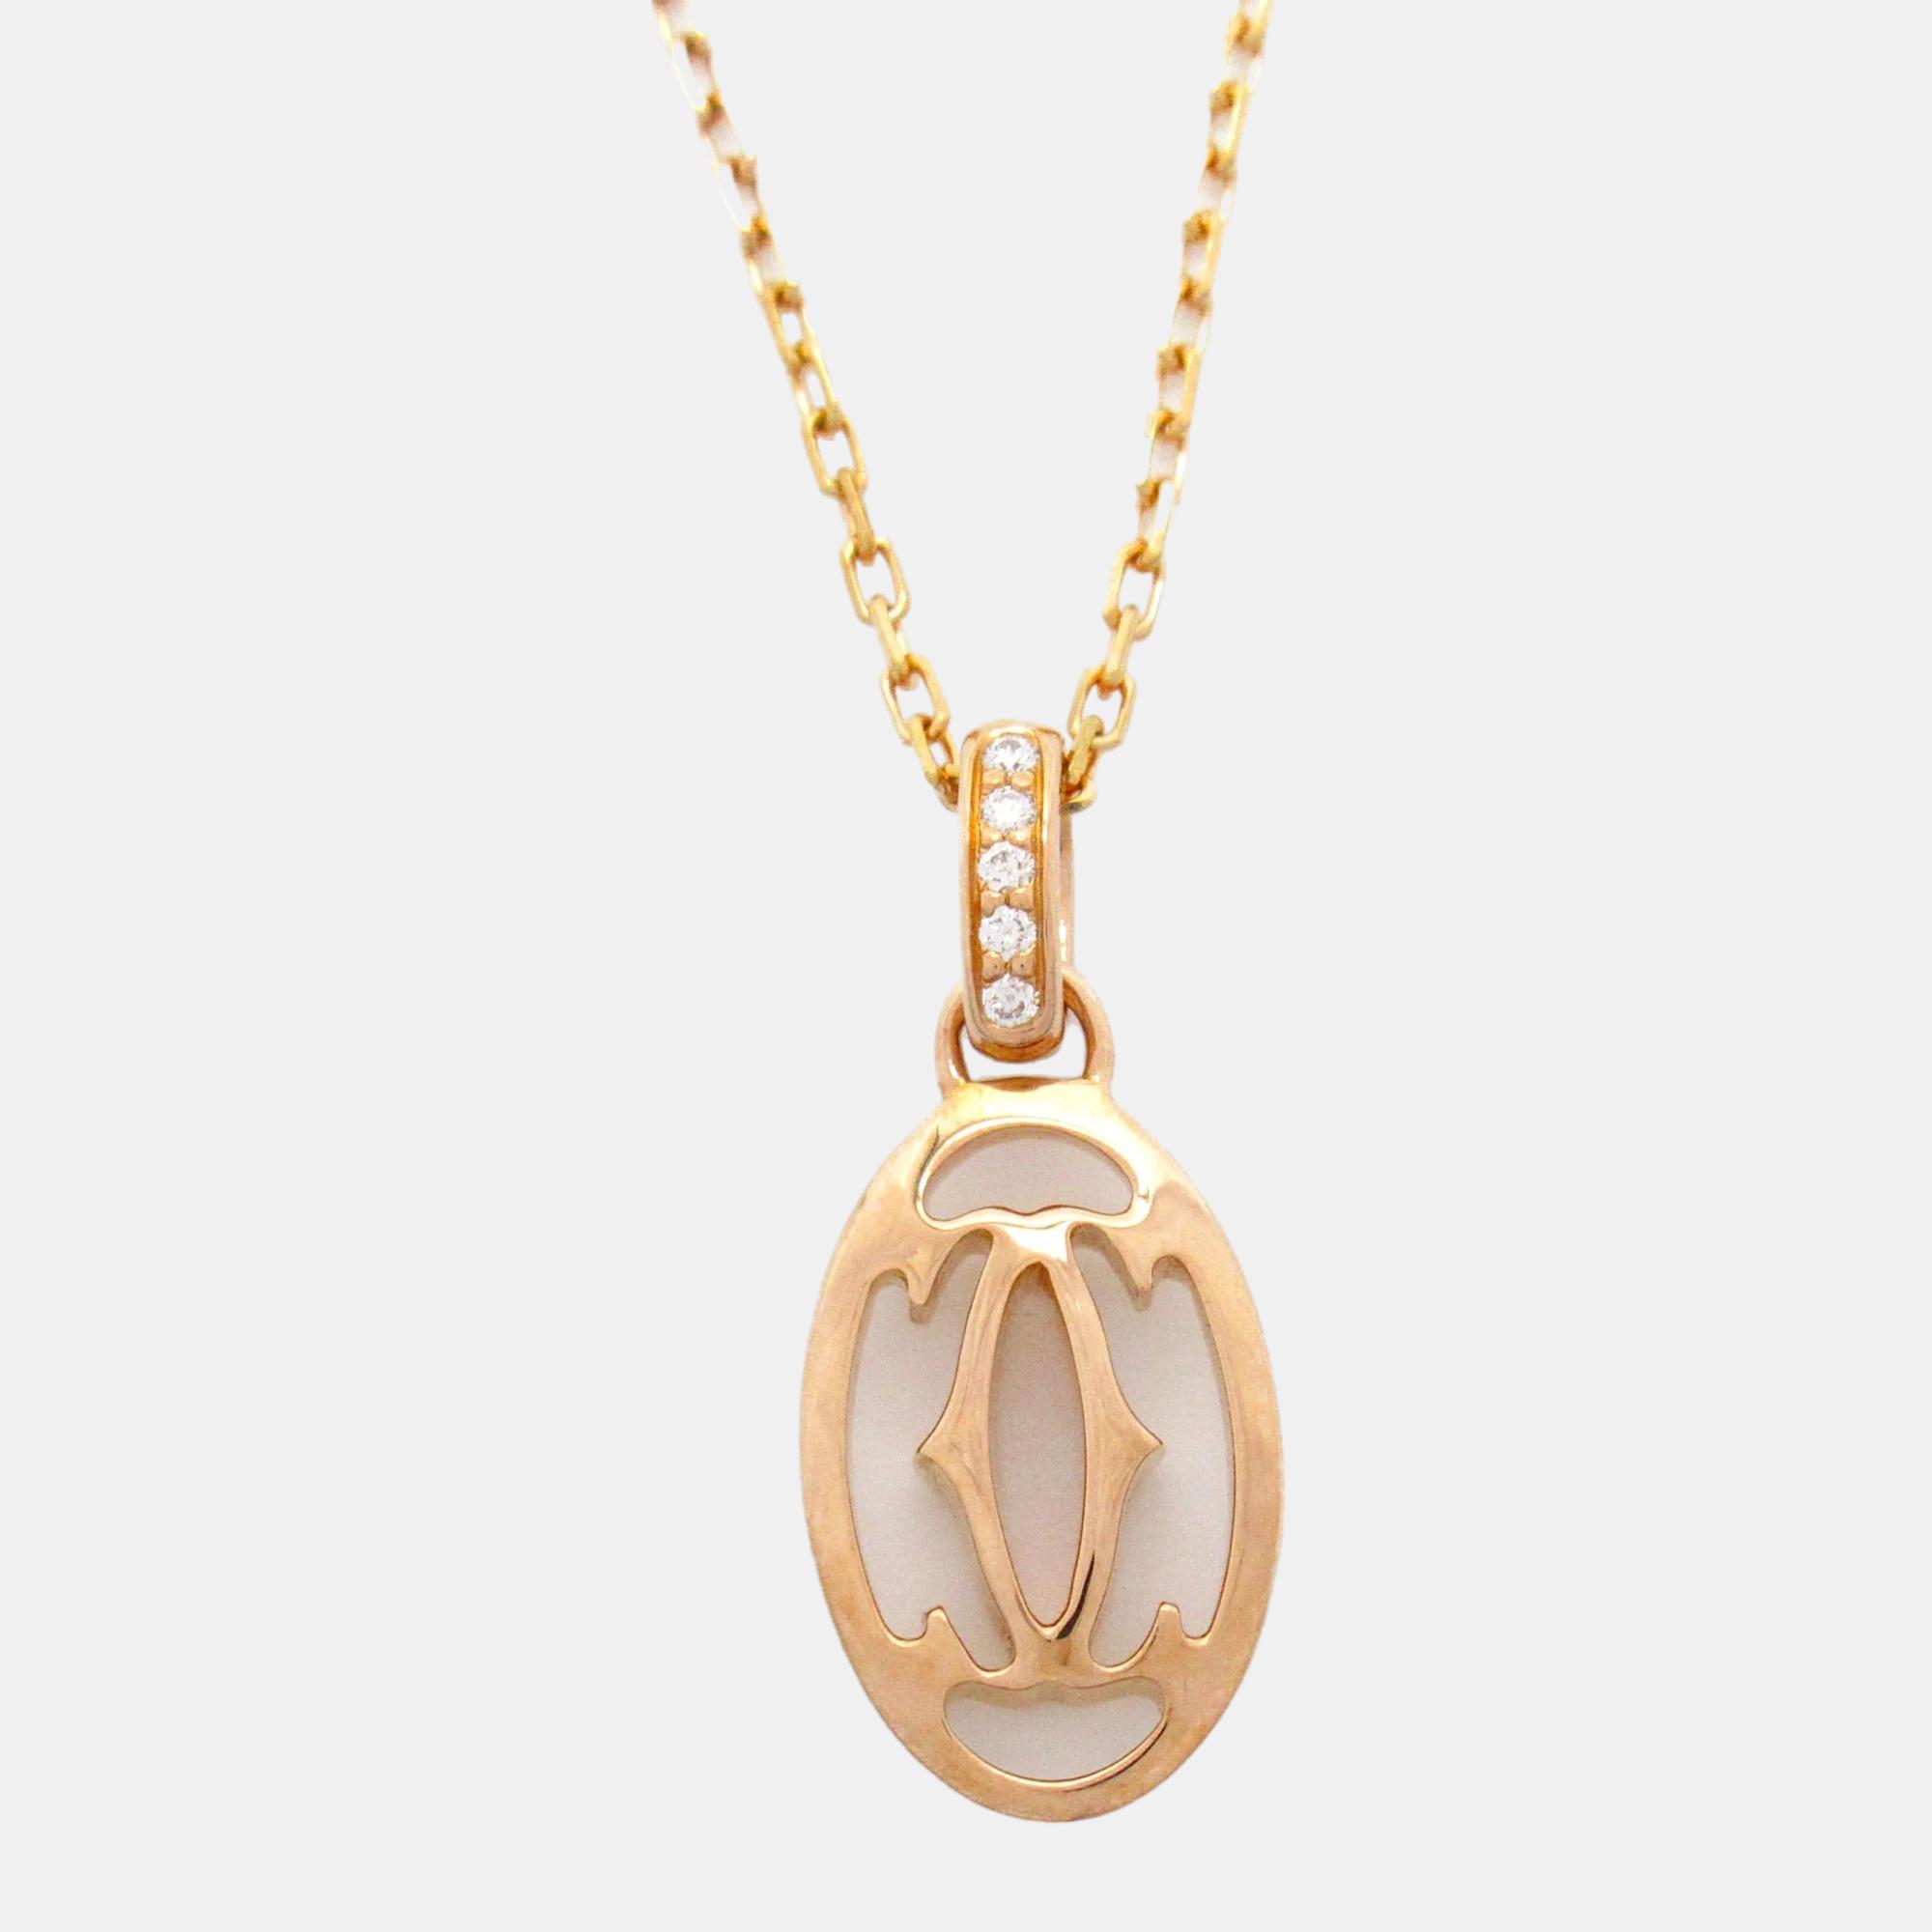 Cartier 18k rose gold and diamond double c pendant necklace